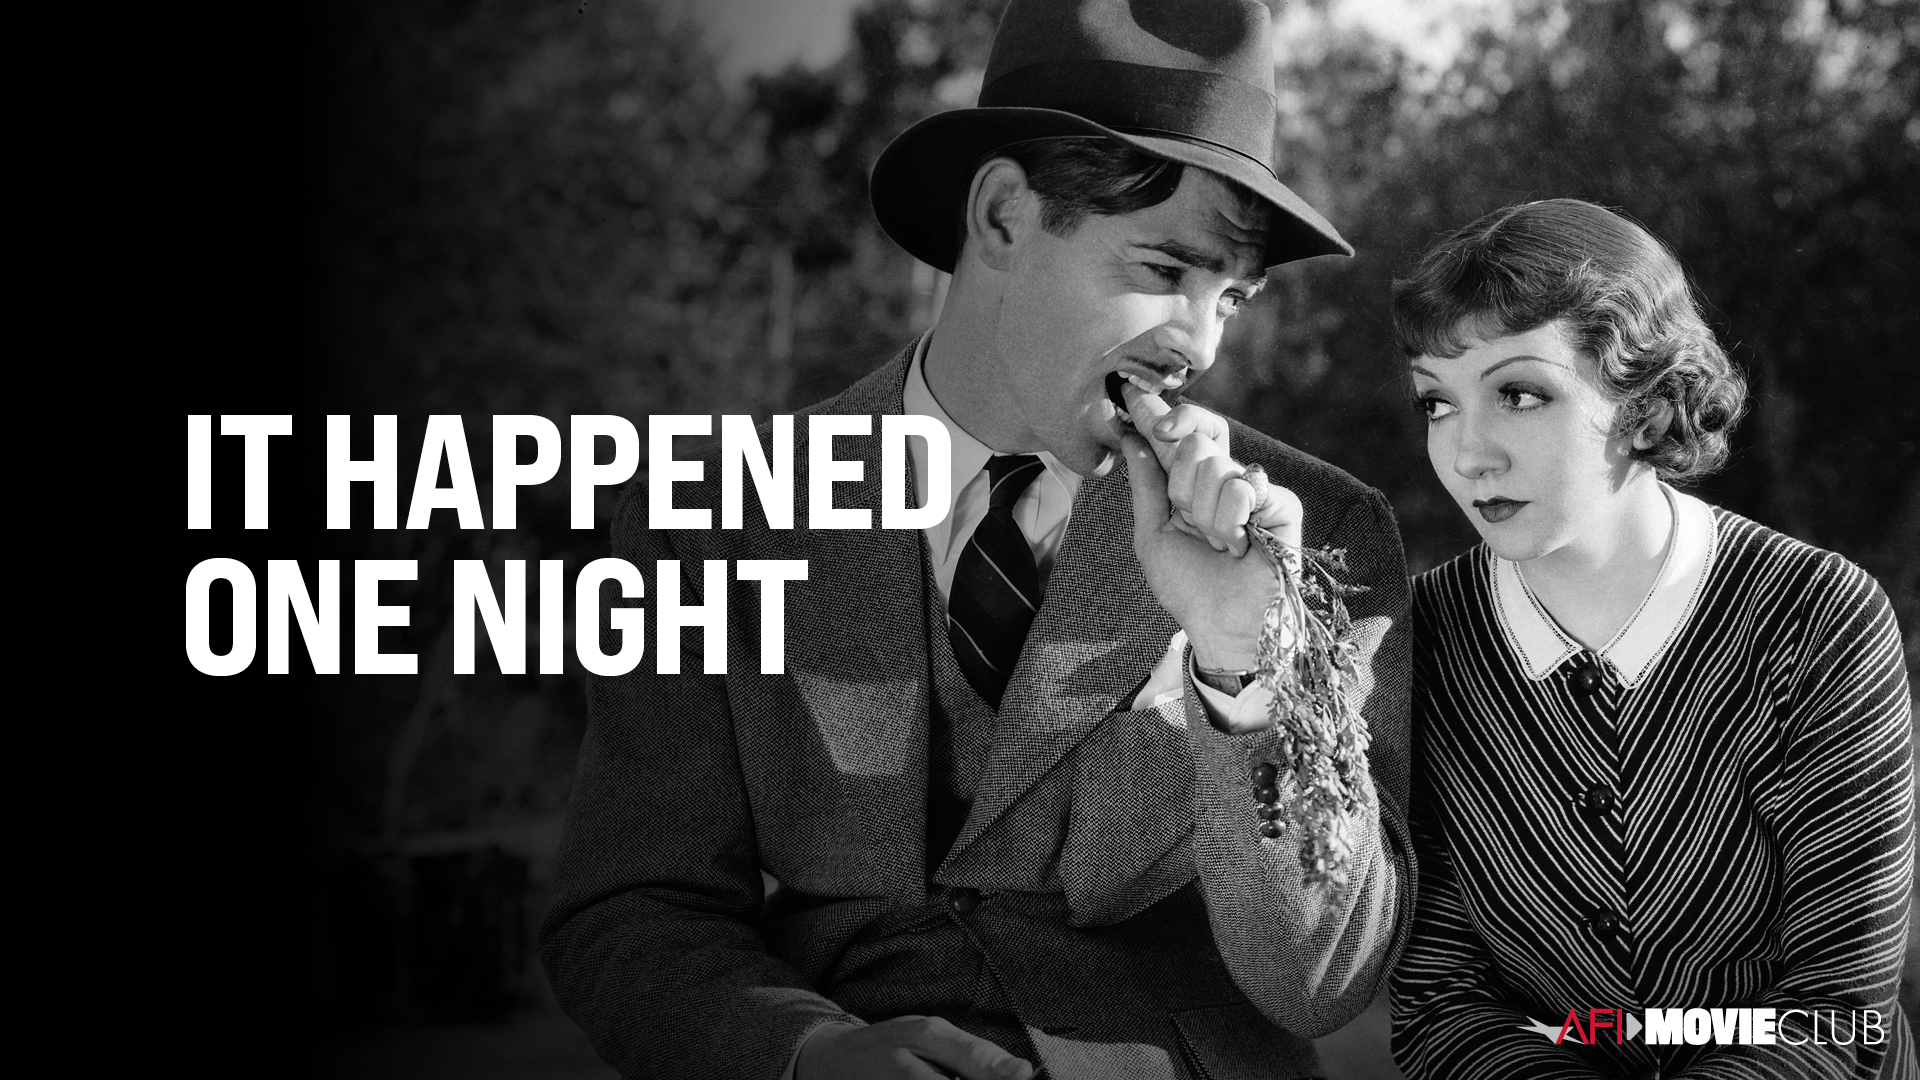 It Happened One Night Film Still - Clark Gable and Claudette Colbert